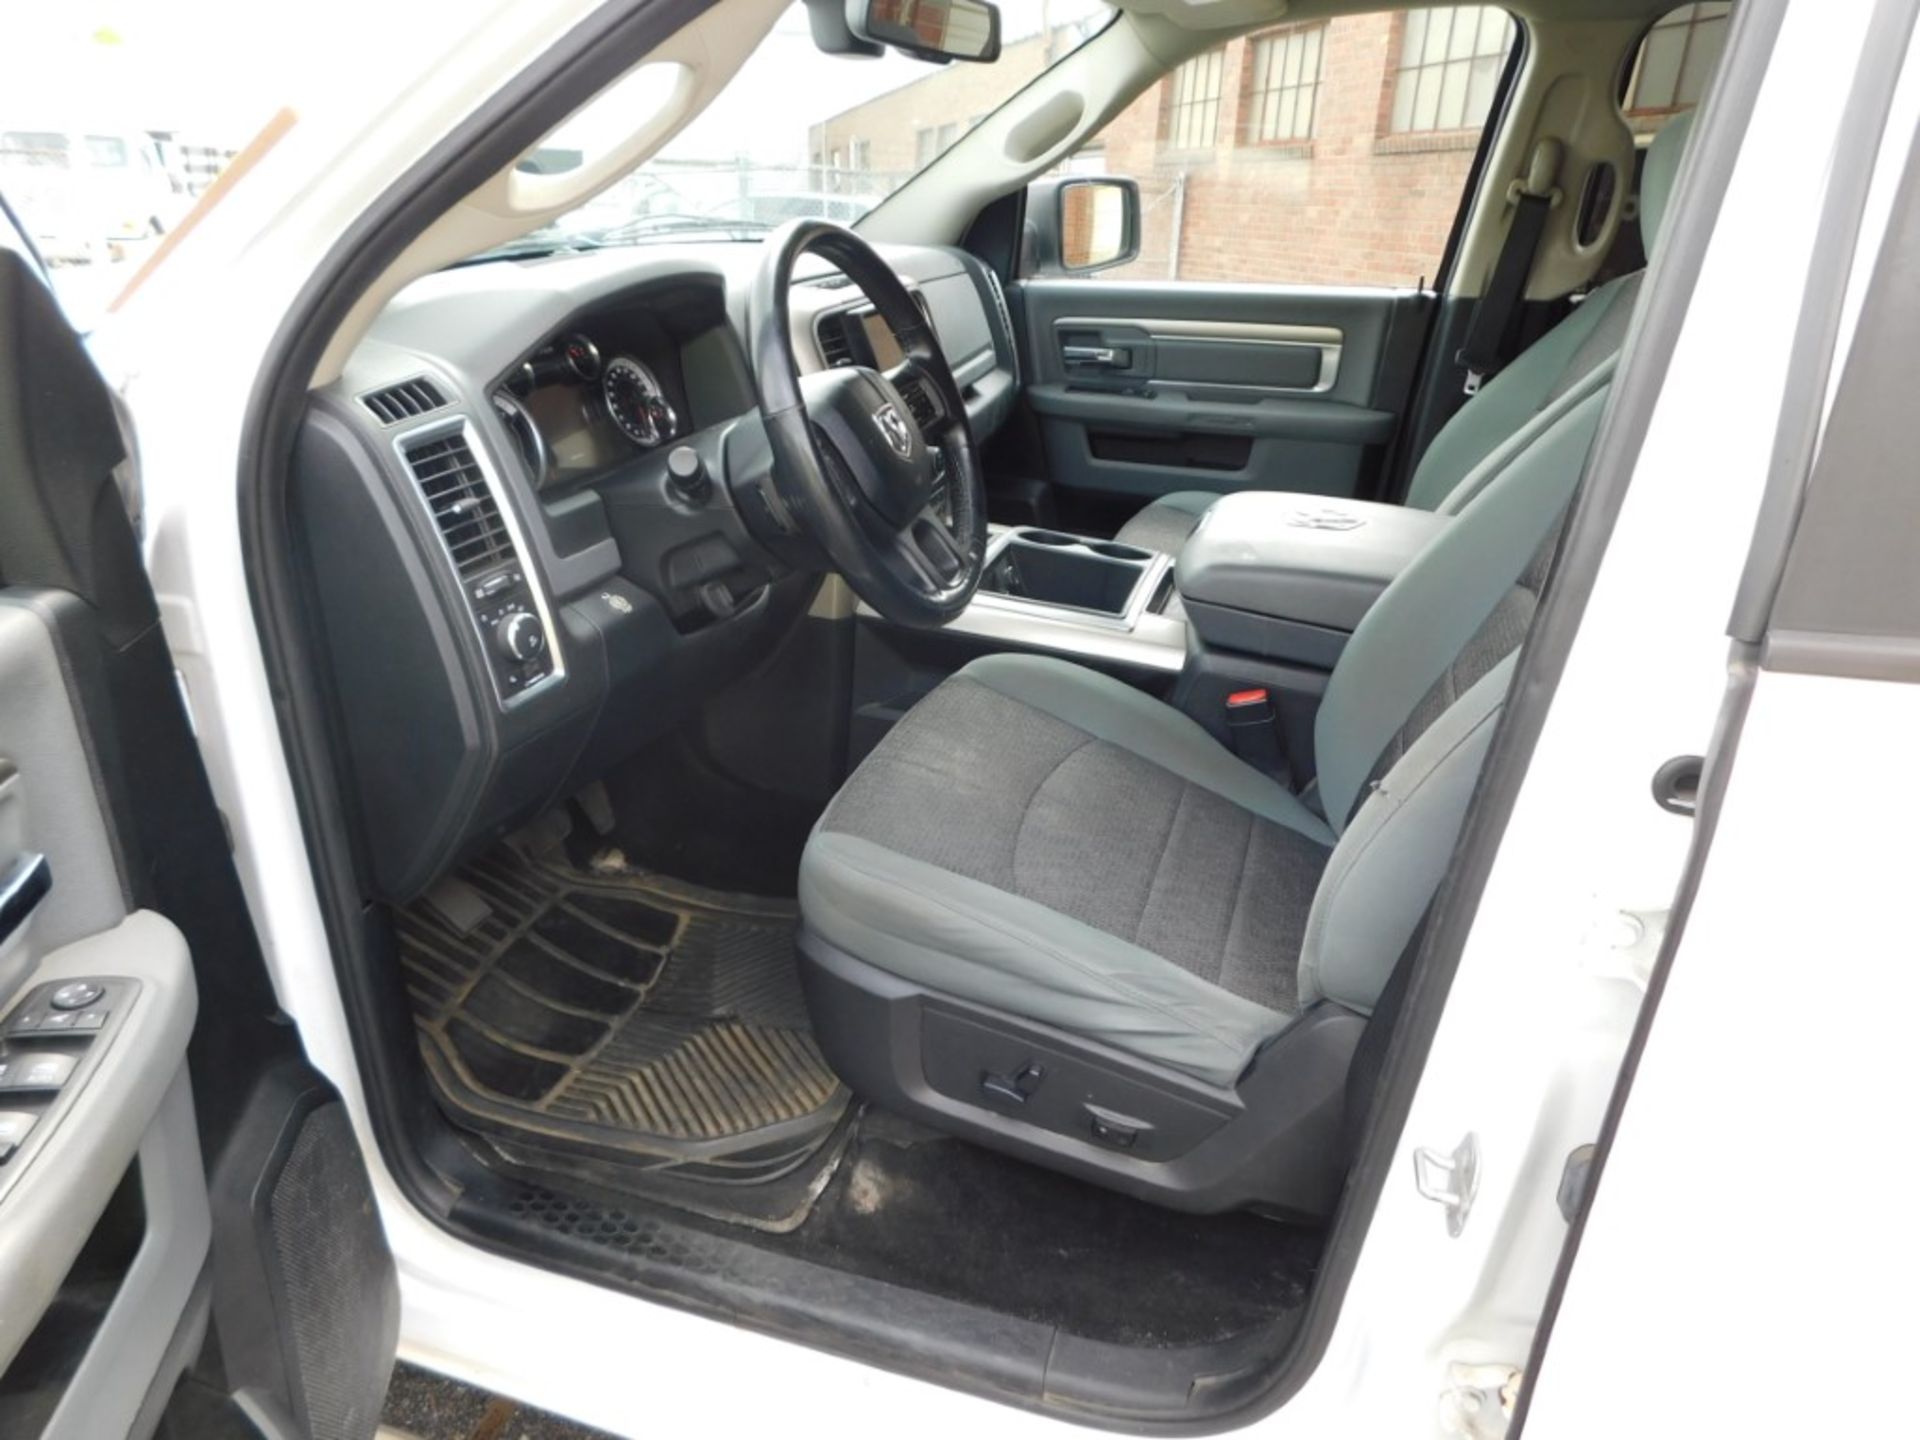 2014 Dodge Ram 1500 Pickup VIN 1C6RR7LG0ES306150, Crew Cab, 4 WD, Automatic, Cruise Control, PW, PL, - Image 19 of 33